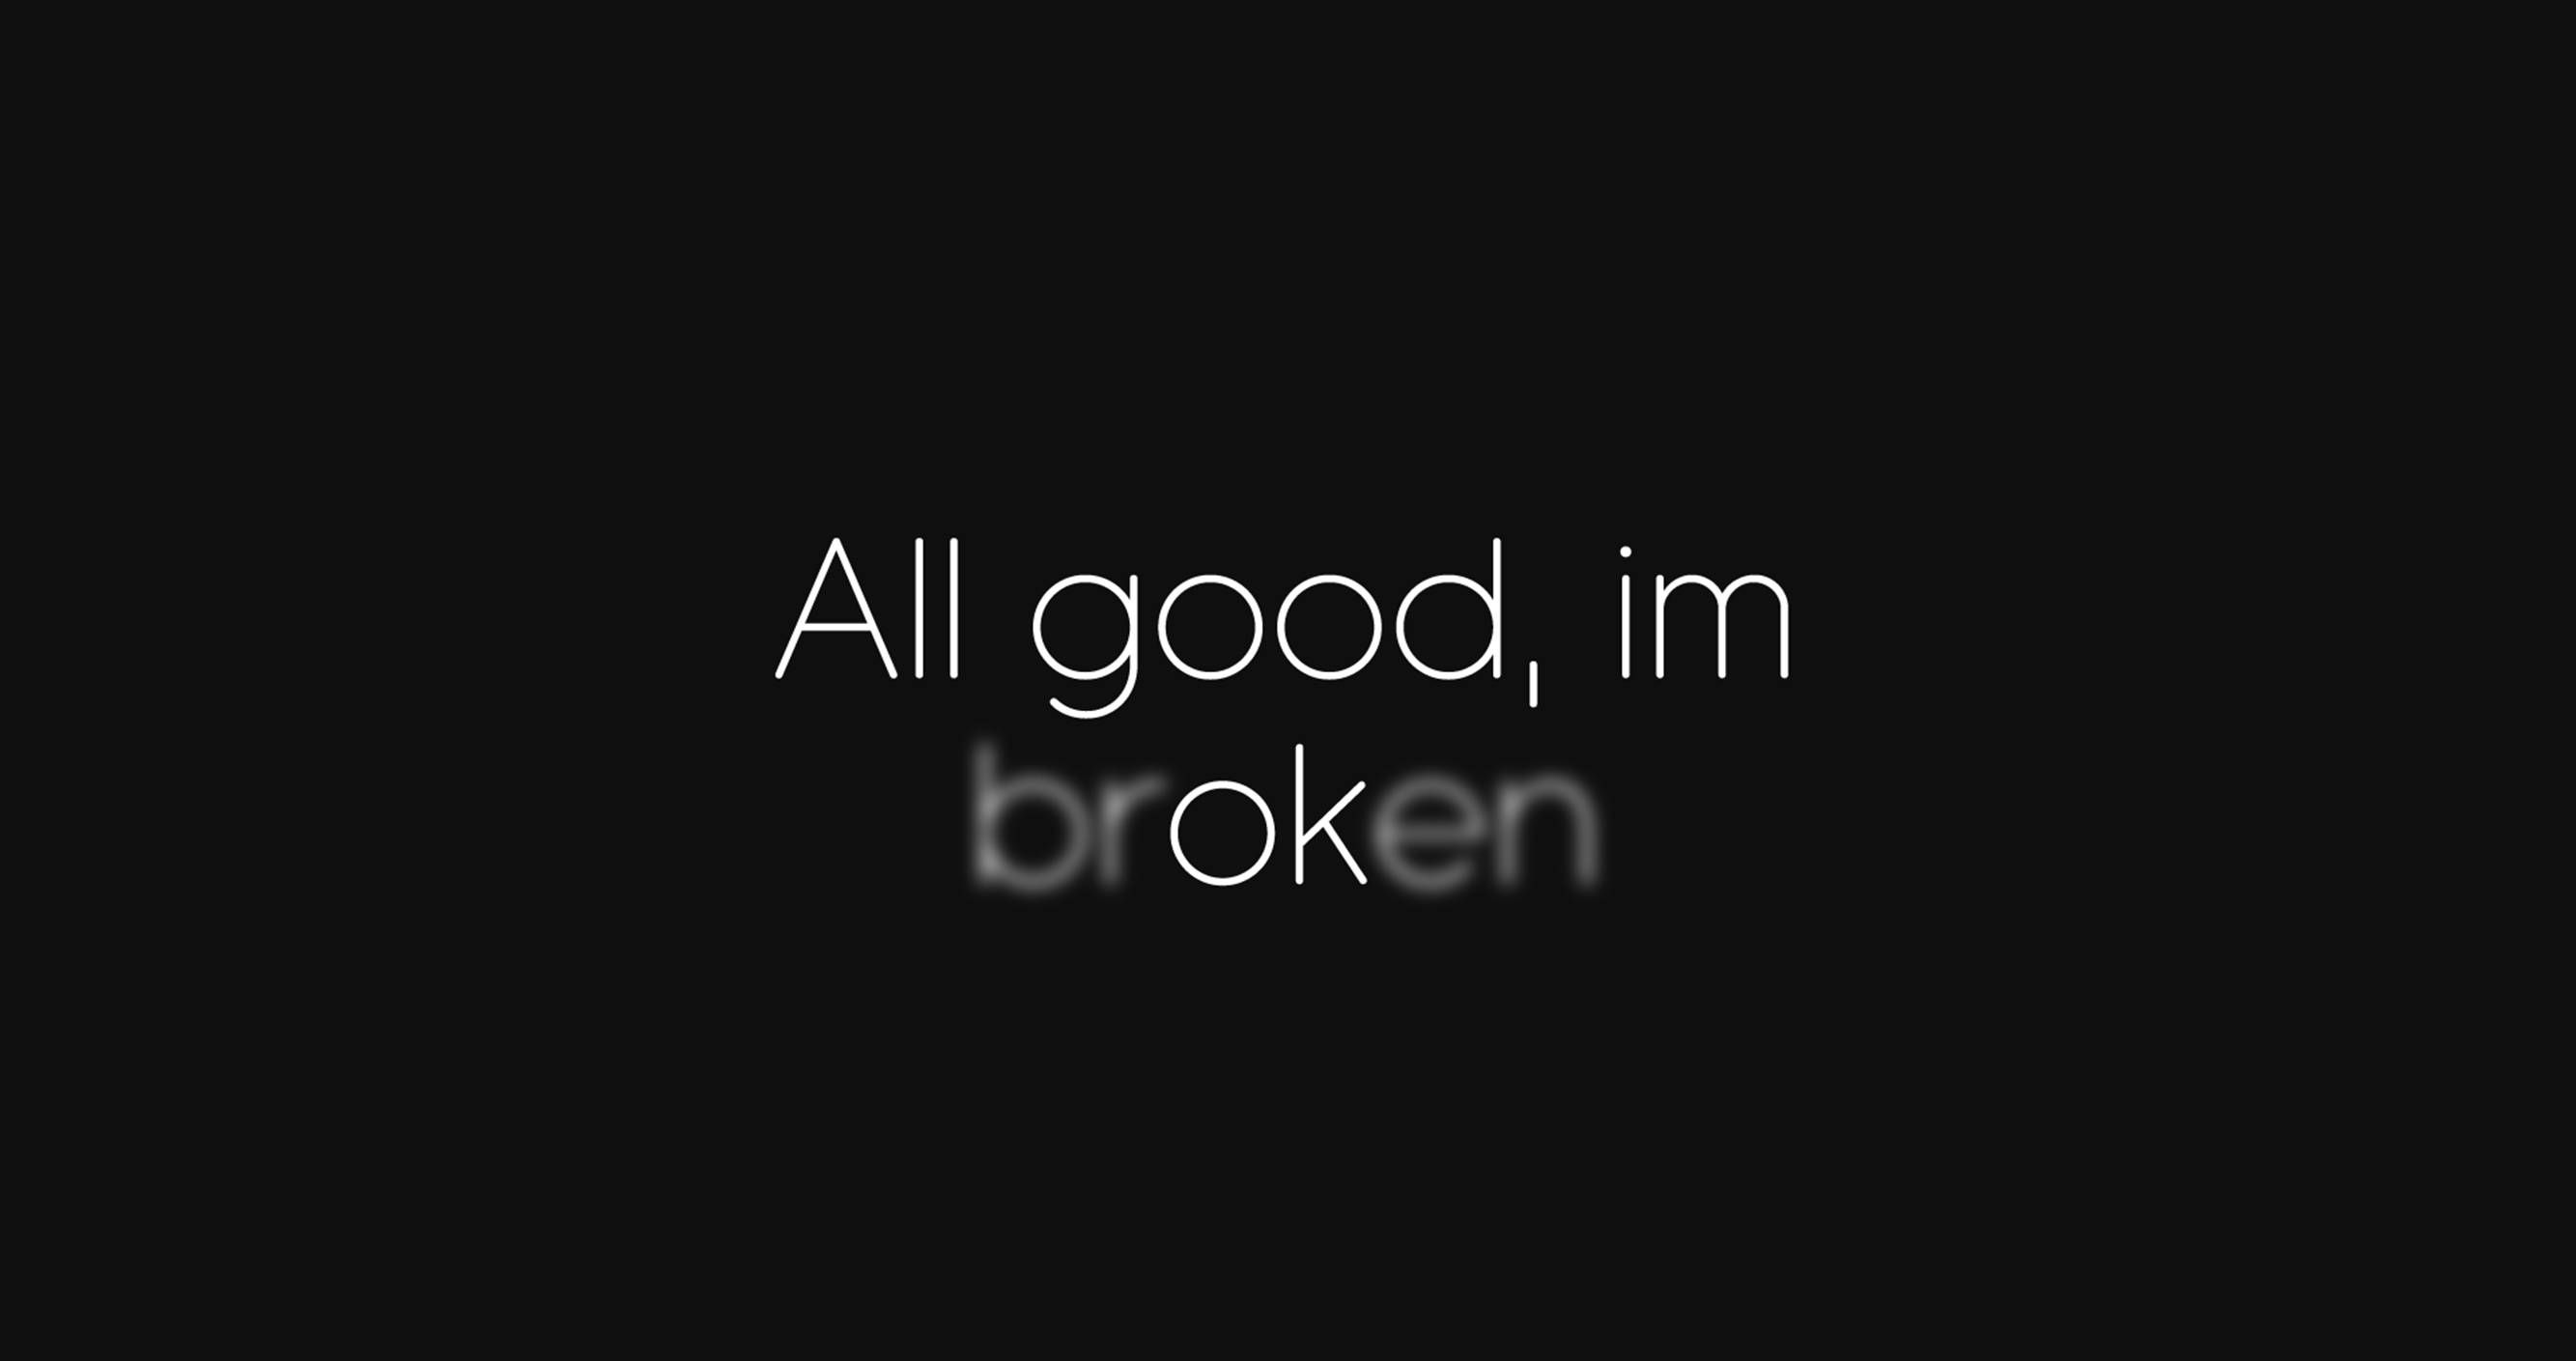 All good, im broken - Sad, sad quotes